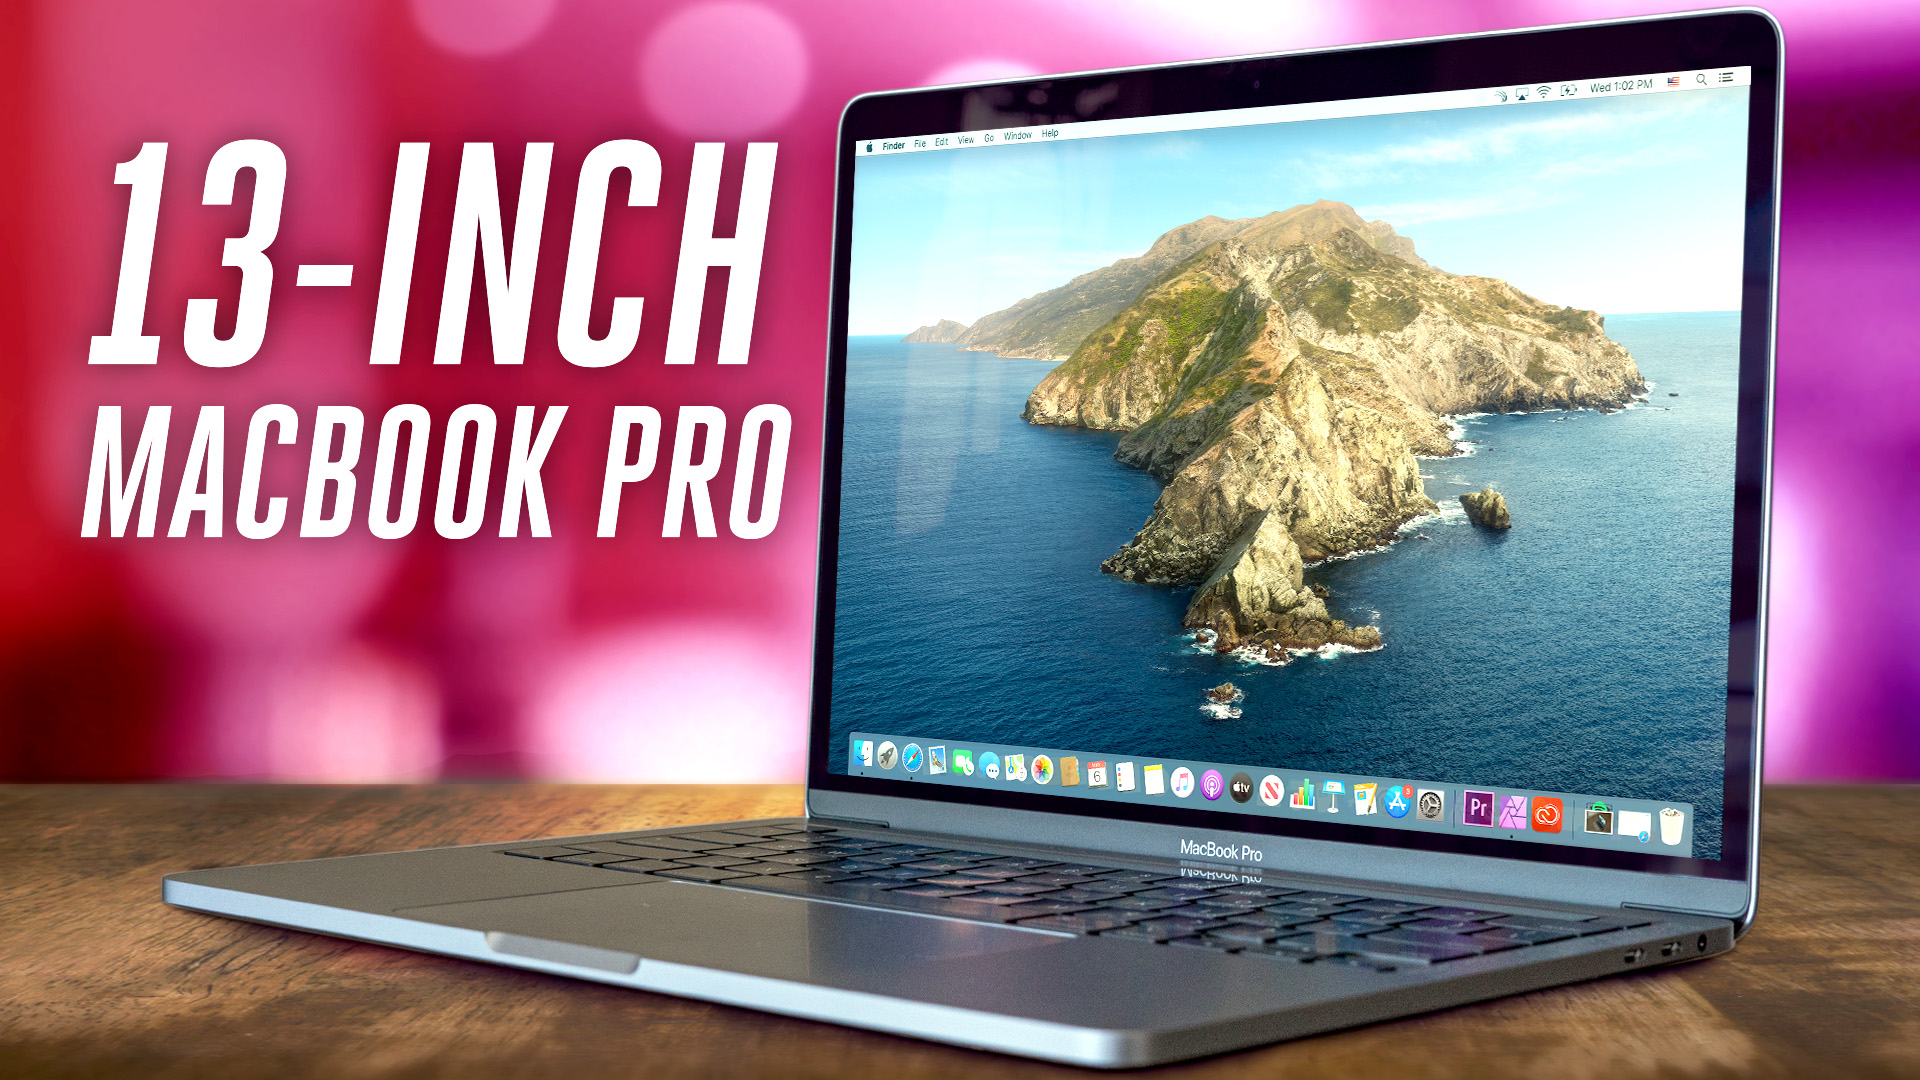 Apple MacBook Pro (13-inch, 2020) review